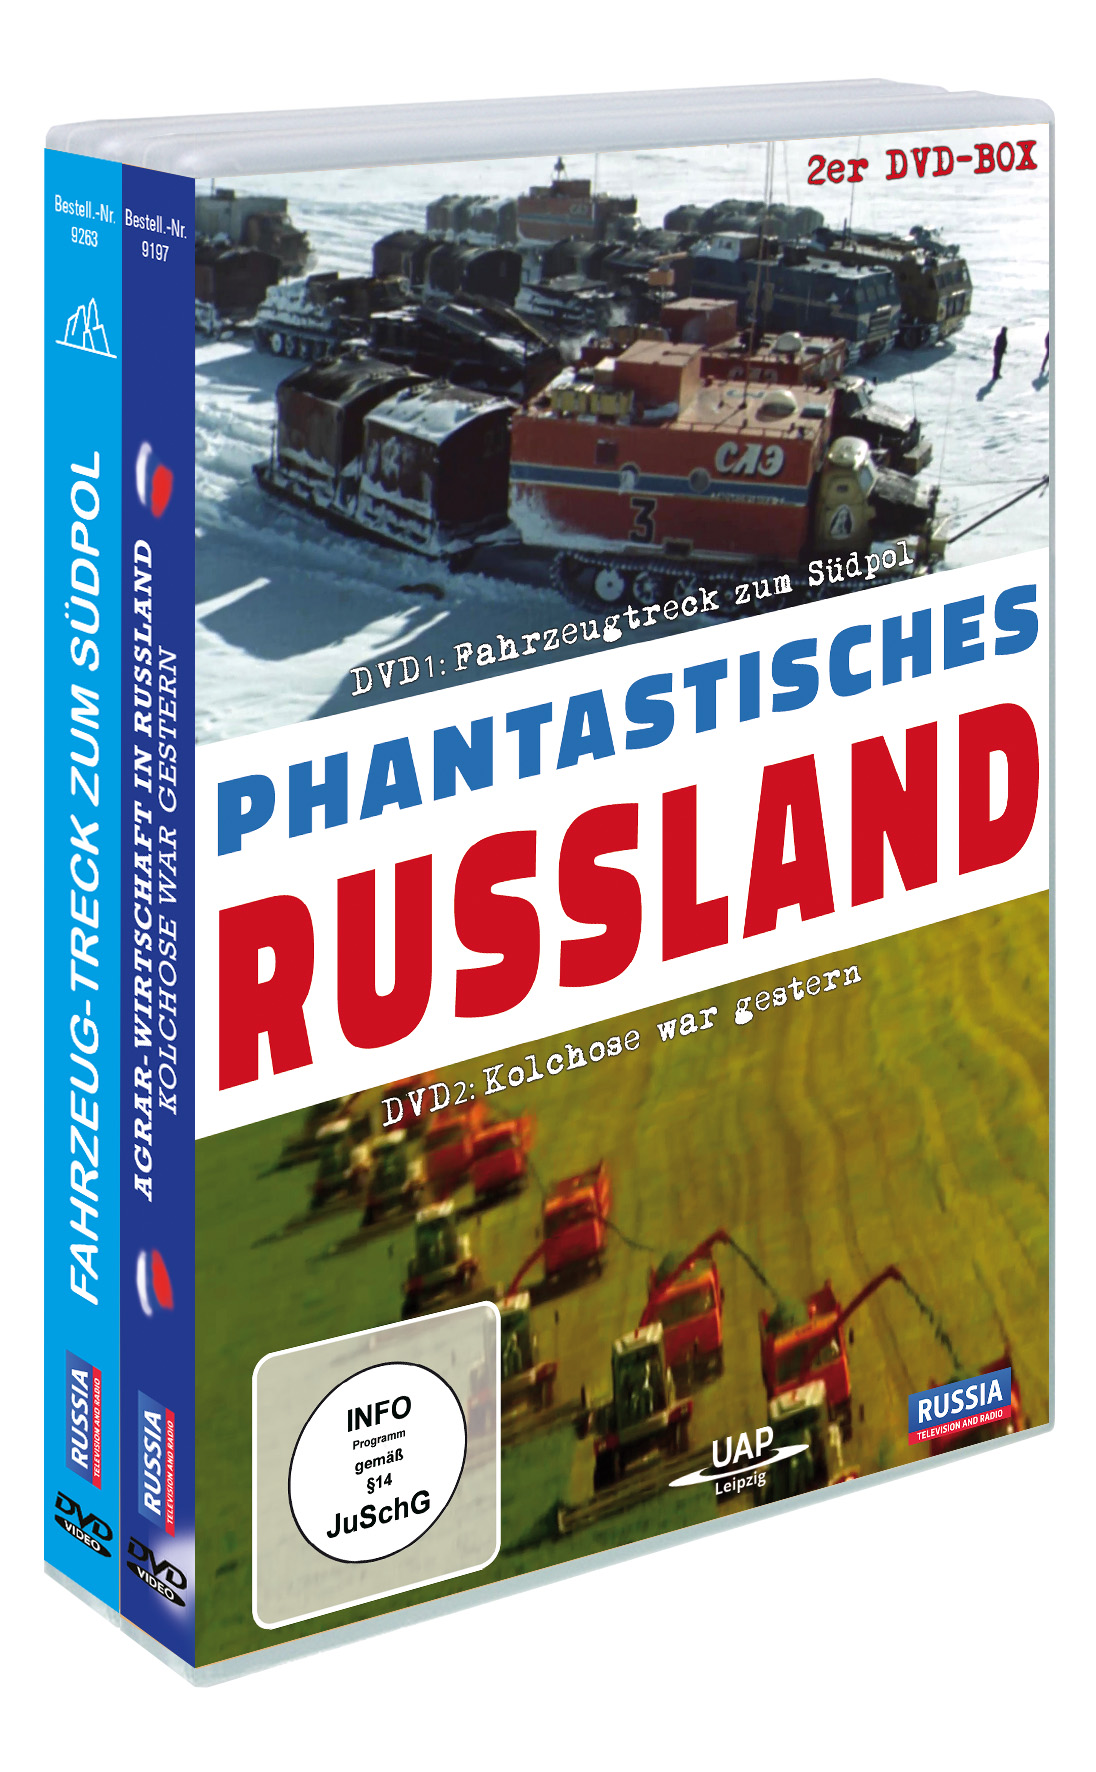 2er Russland - DVD-BOX DVD Phantastisches